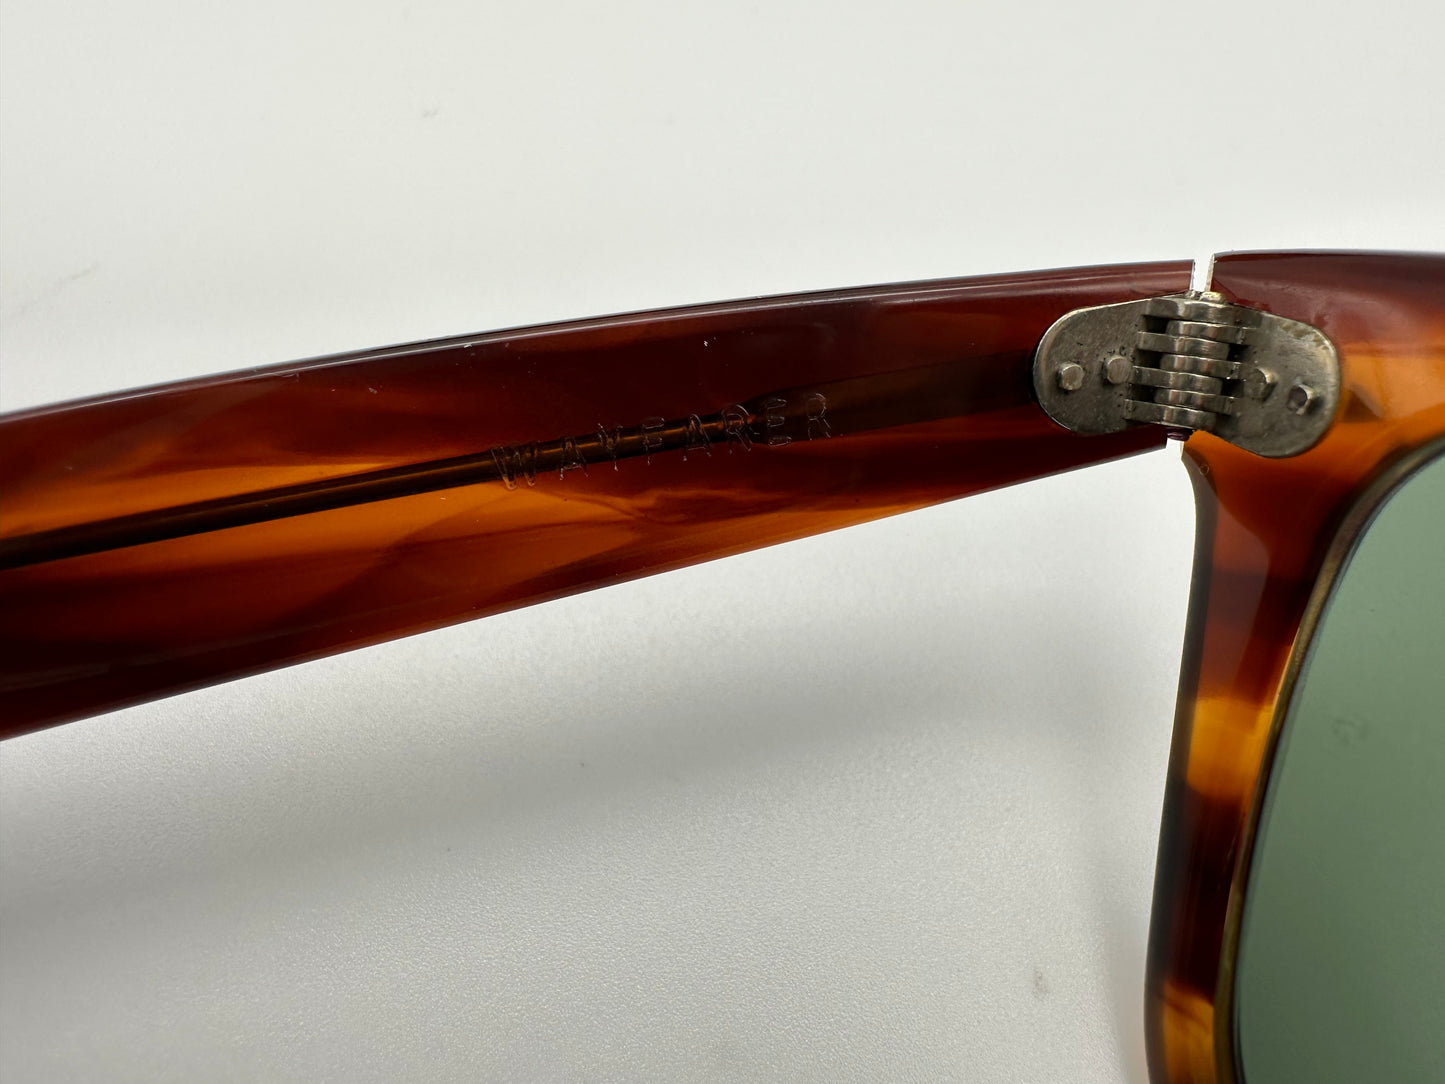 Vintage Ray Ban B&L Wayfarer 50mm 22mm Mock Tortoise G-15 Glass rare Ireland